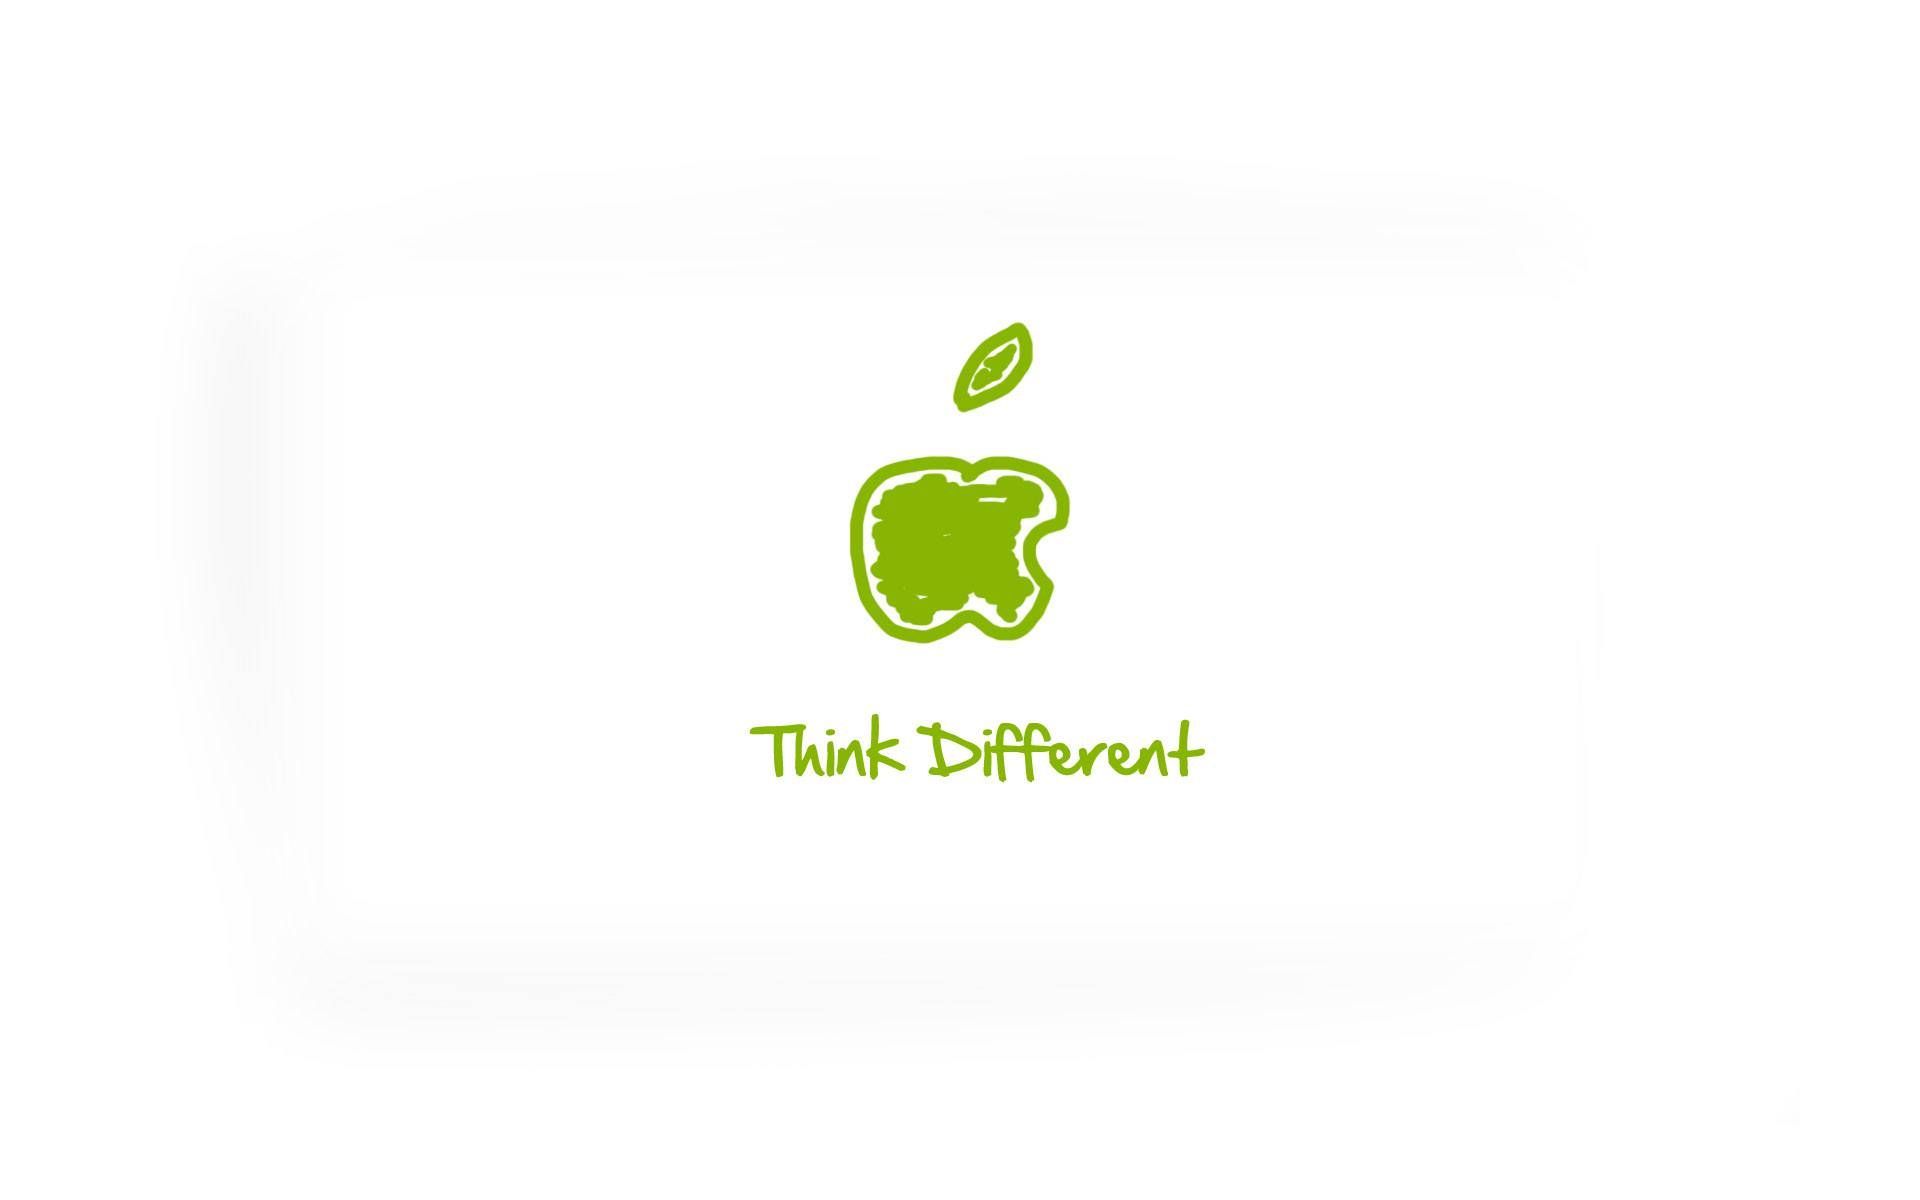 Logo apple inc. imac wallpaper - (#13843) - High Quality and ...